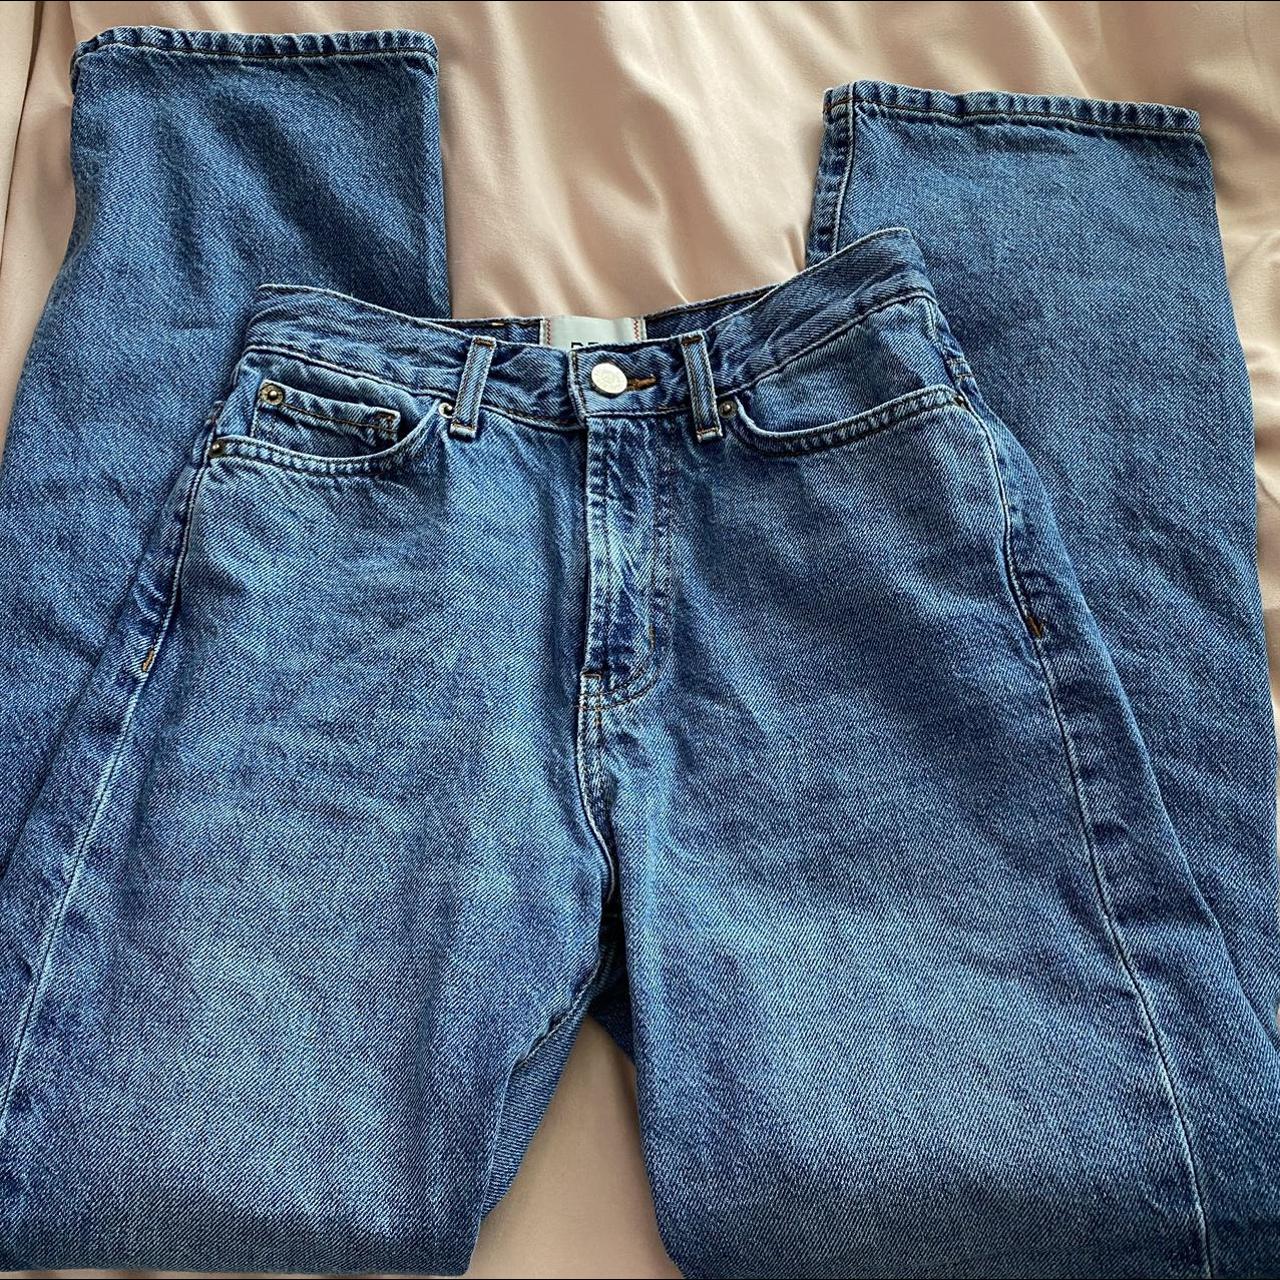 Urban Outfitters Women's Jeans | Depop